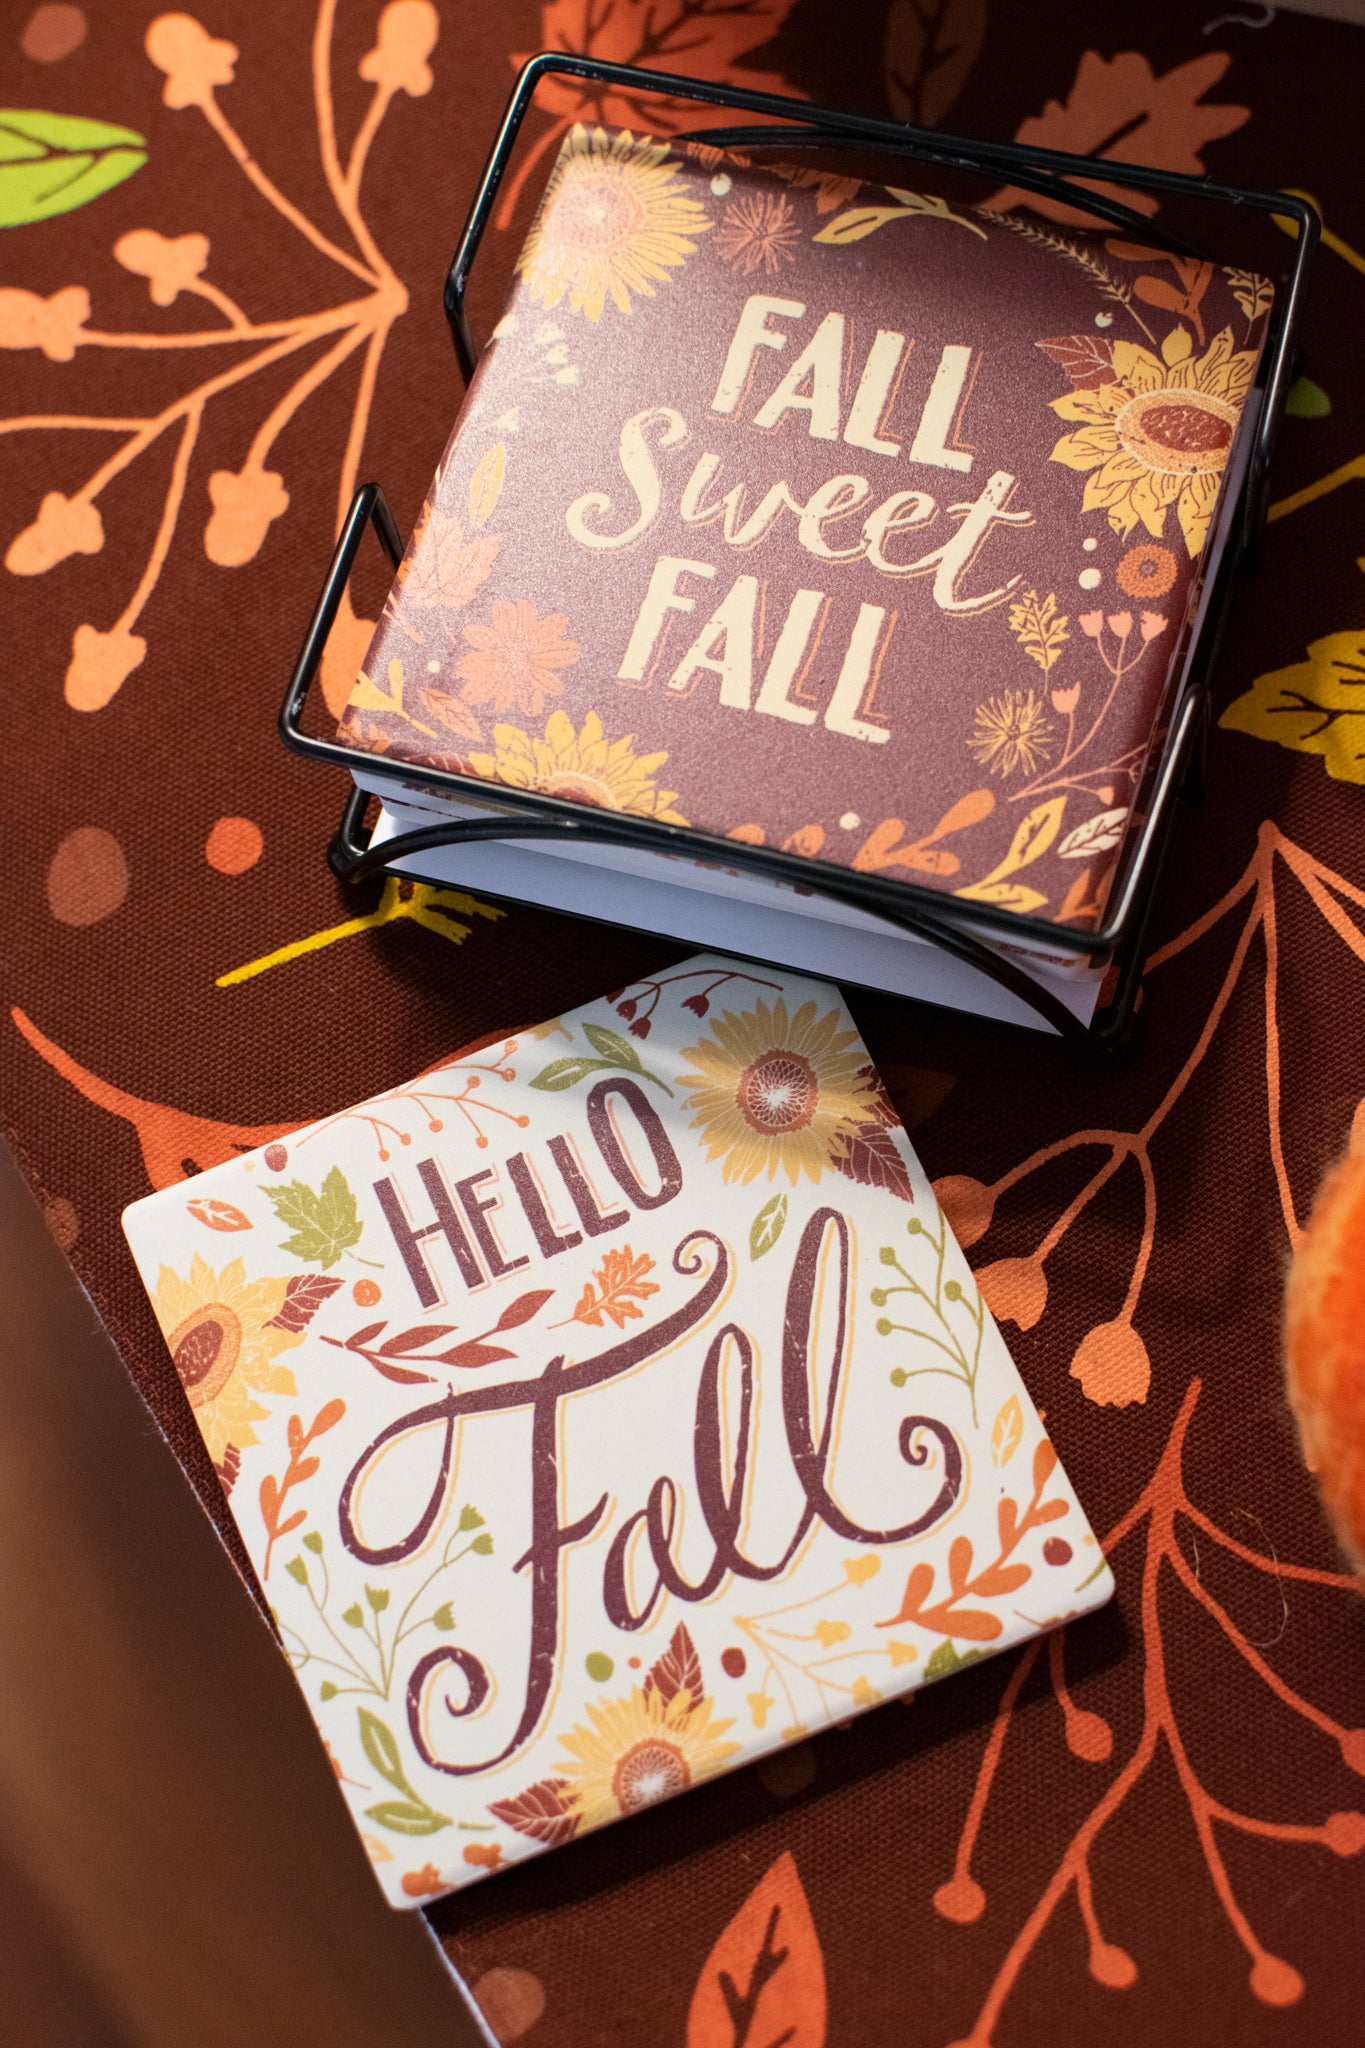 Fall-Sweet-Fall Coaster Set